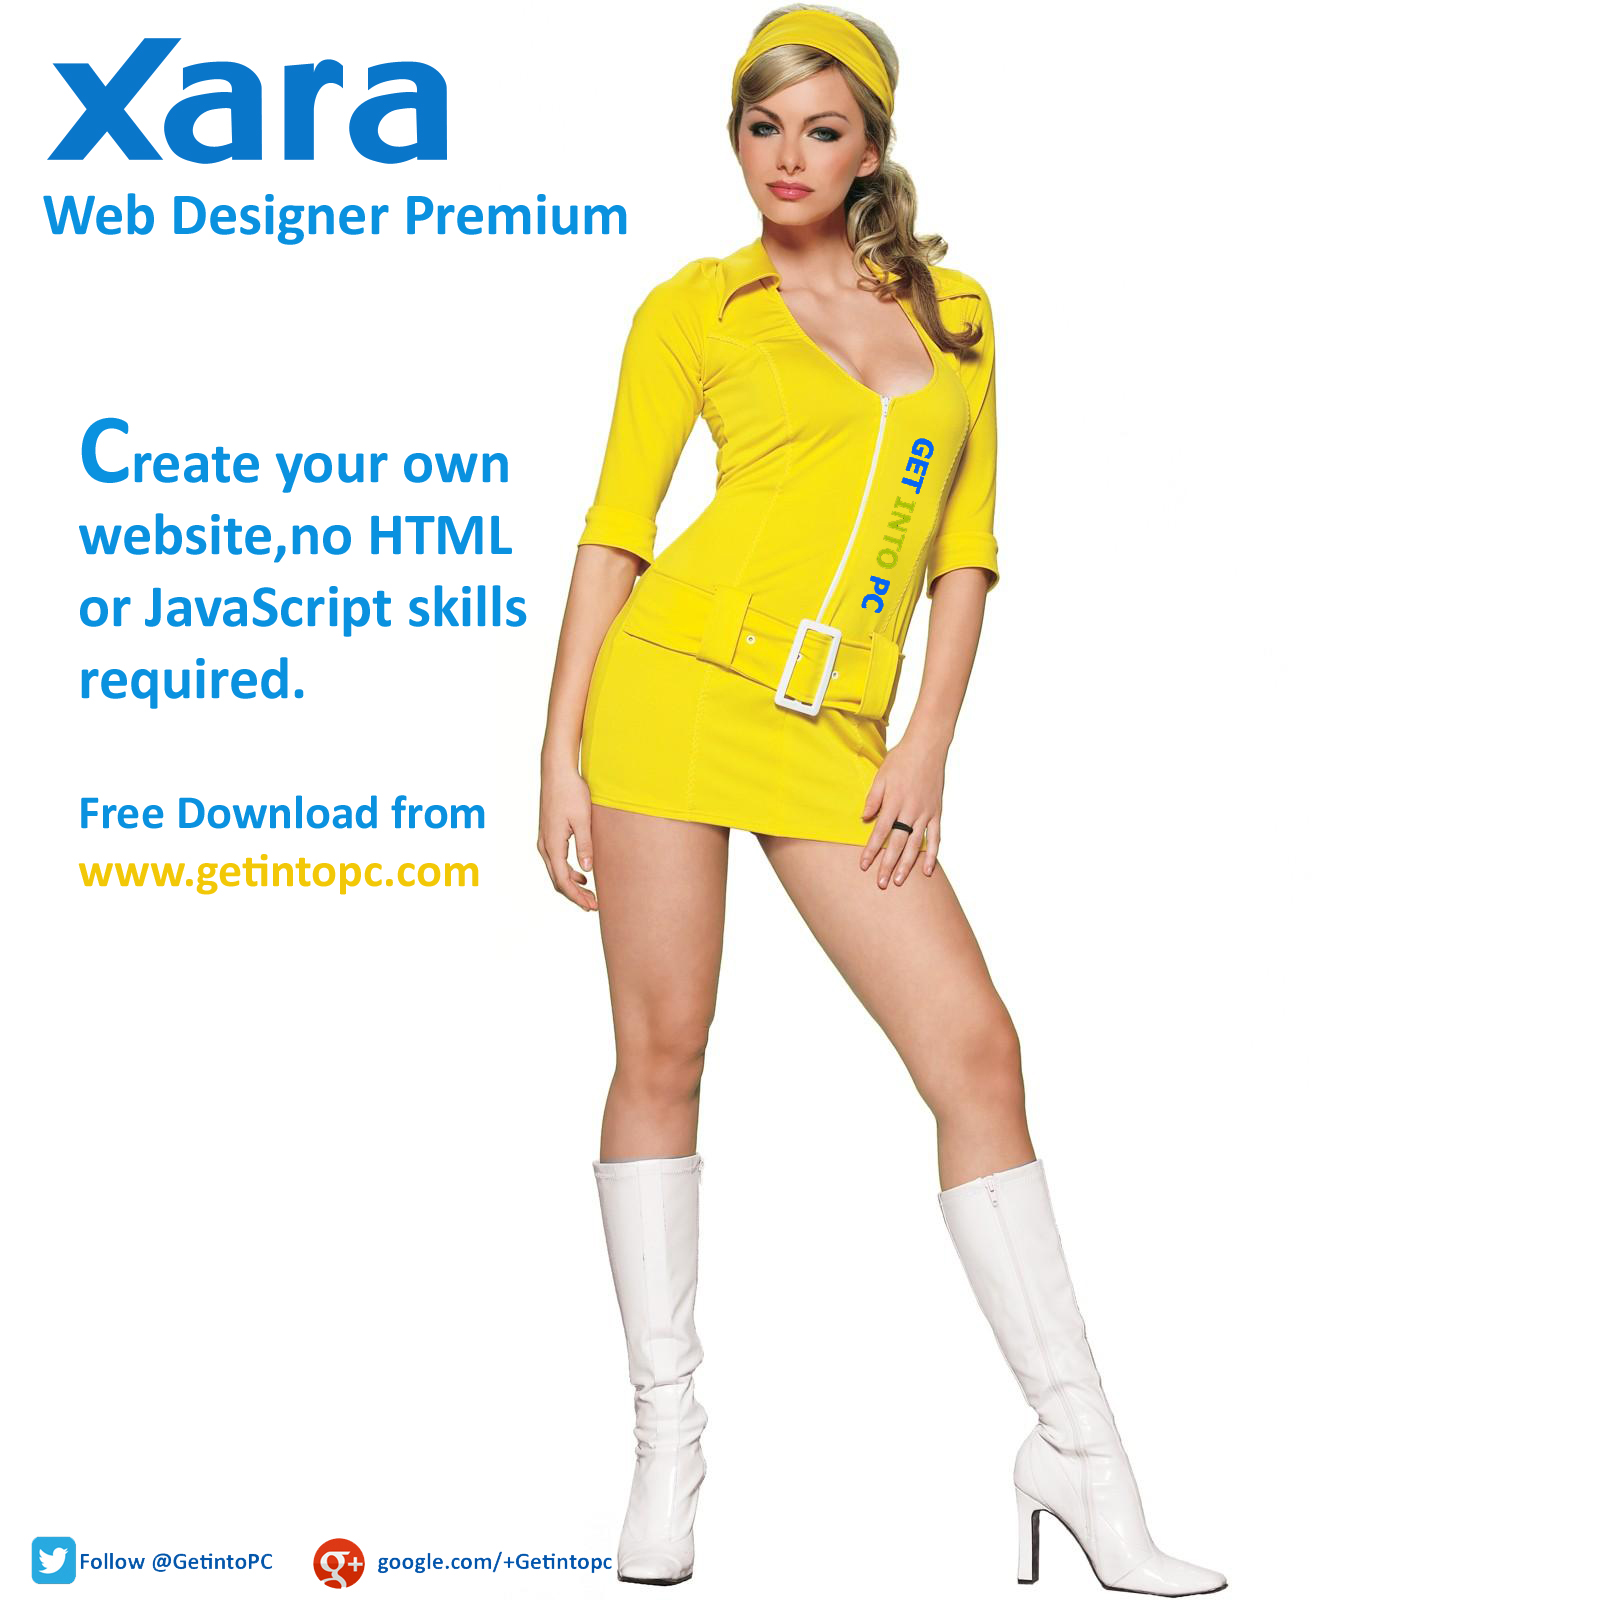 Xara Web Designer Premium Free Download